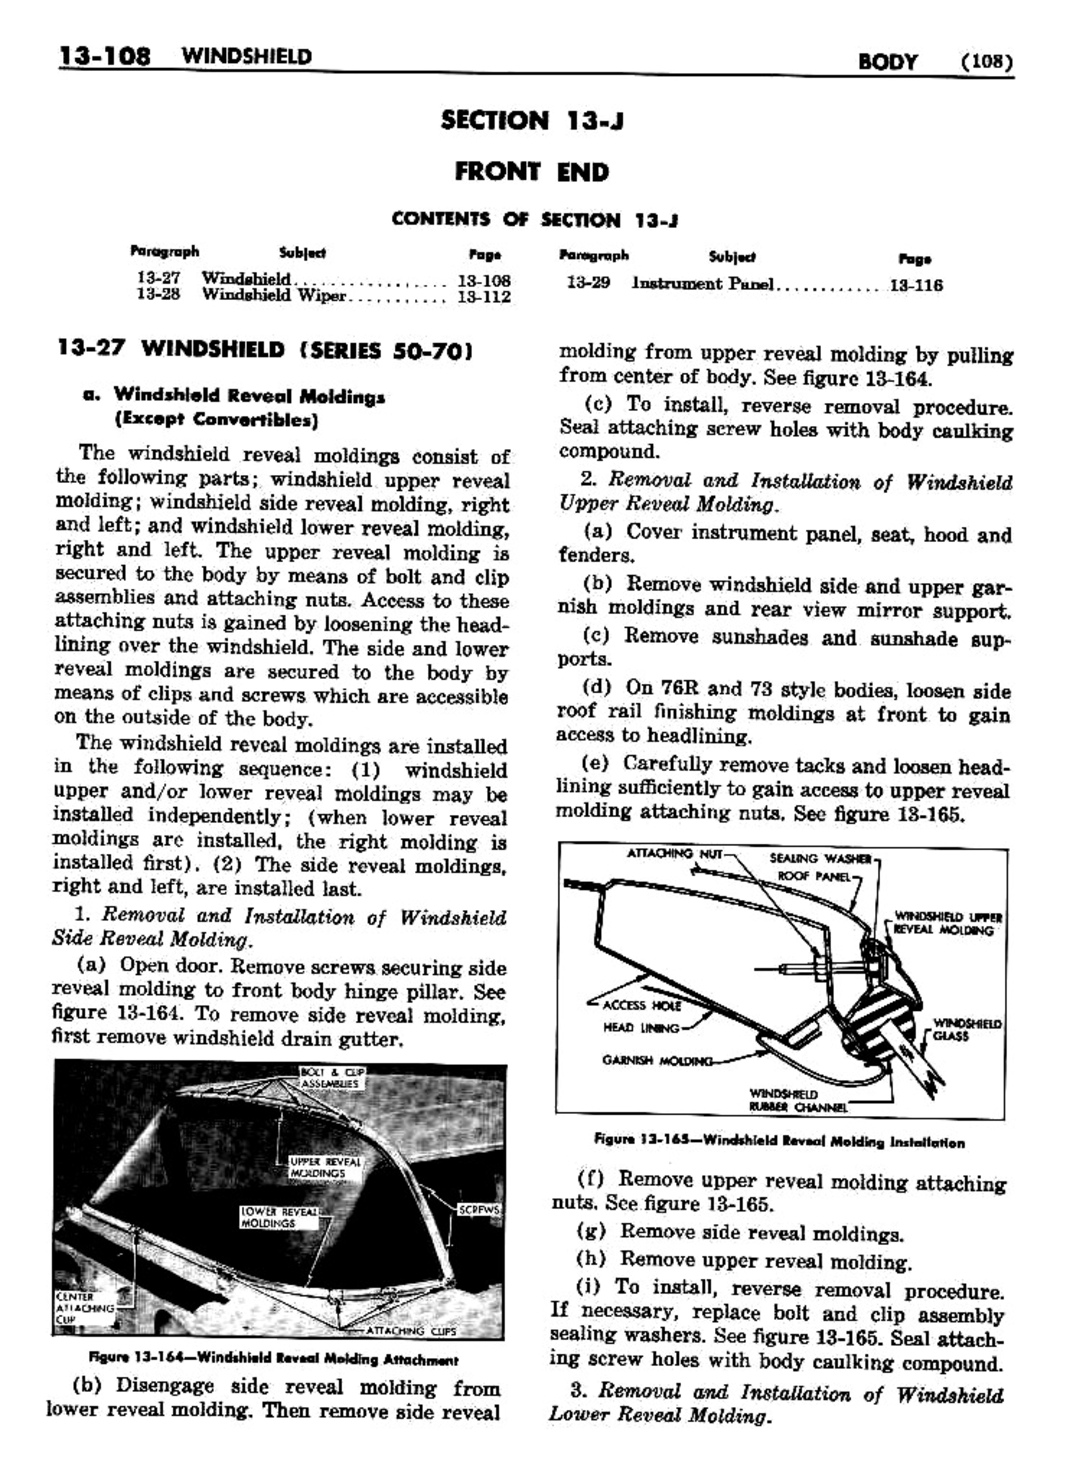 n_1957 Buick Body Service Manual-110-110.jpg